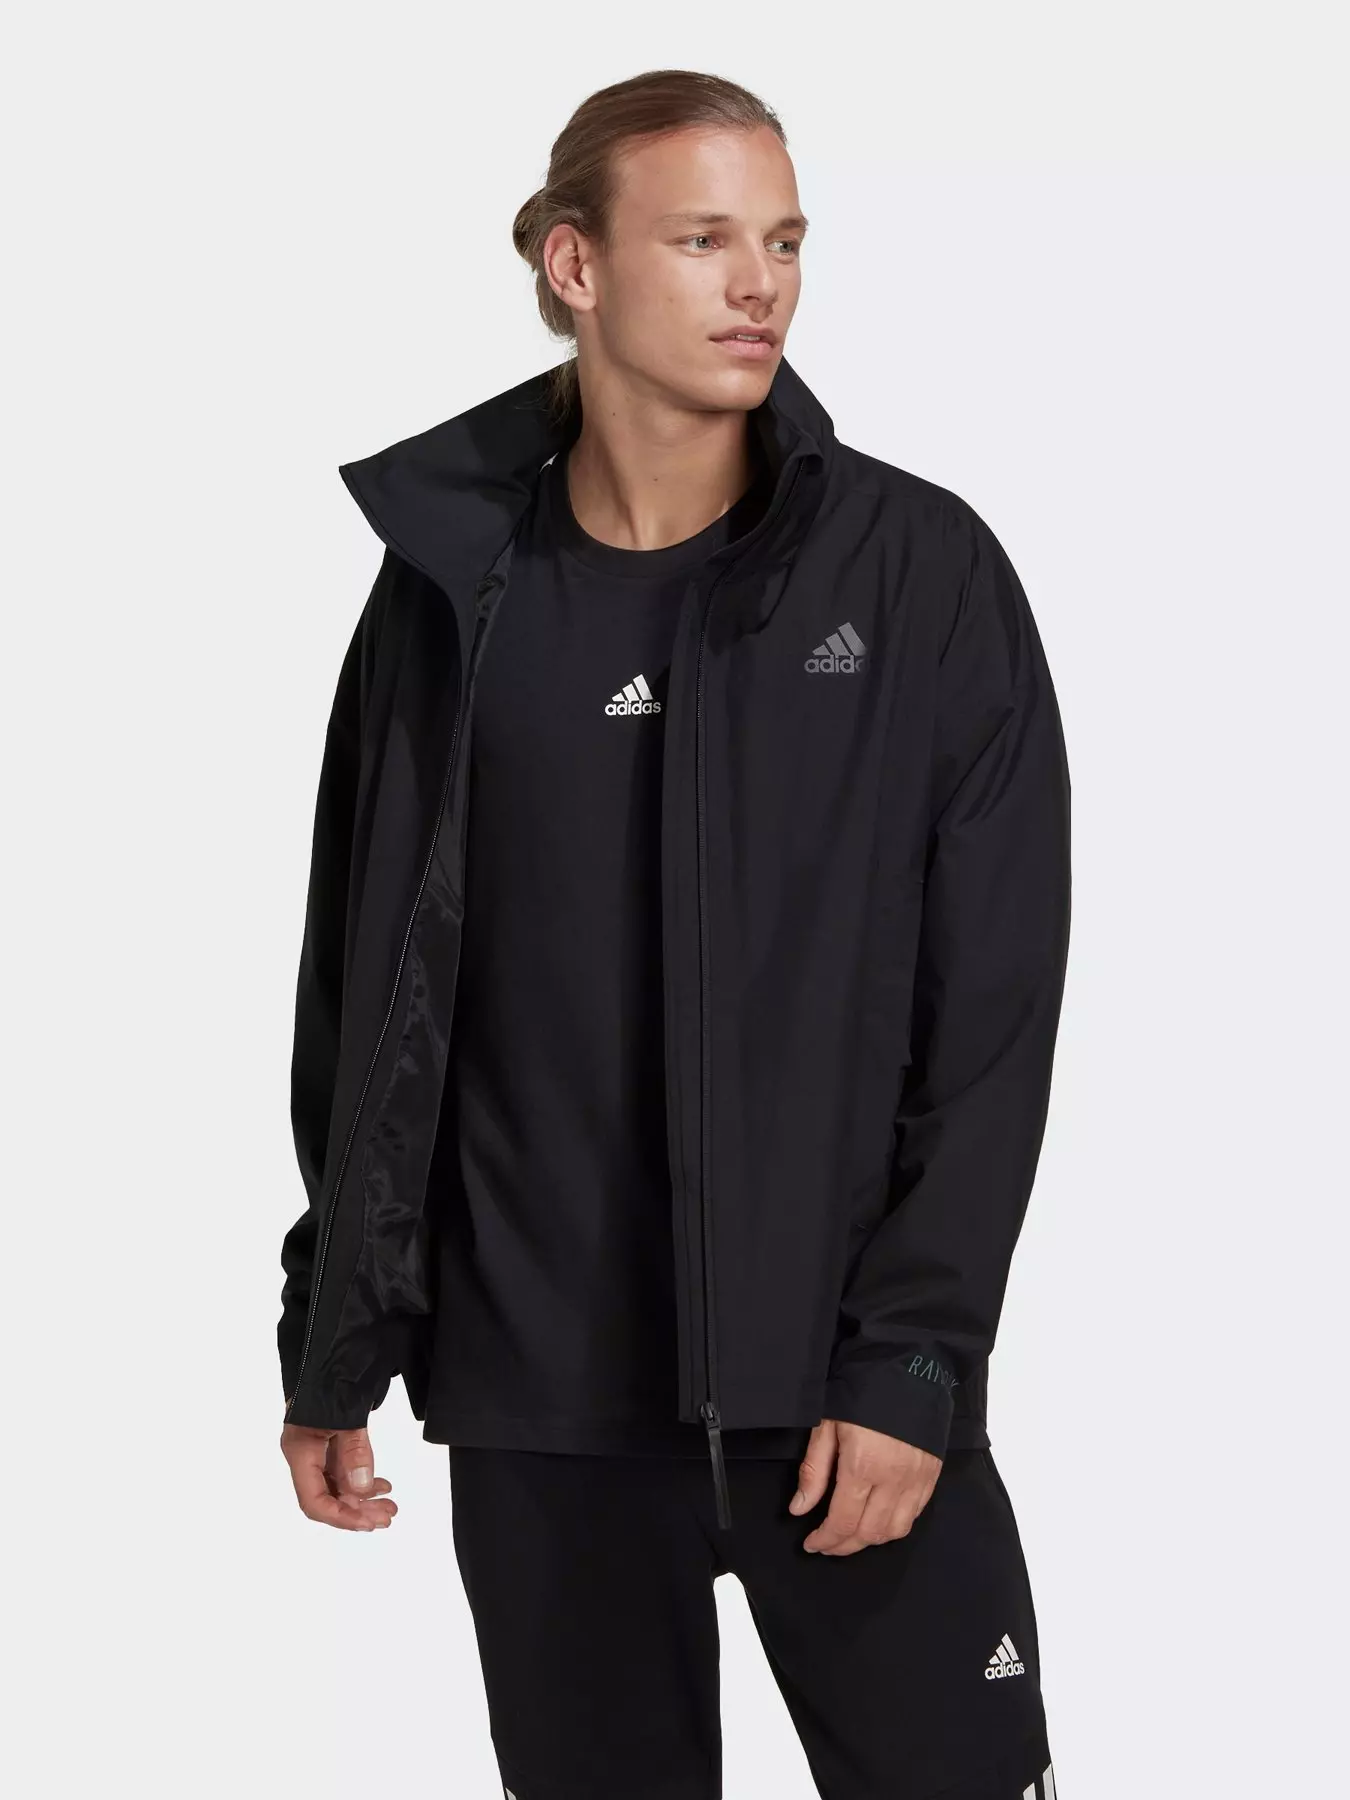 Adidas | Jackets | Sportswear | Men | Ireland